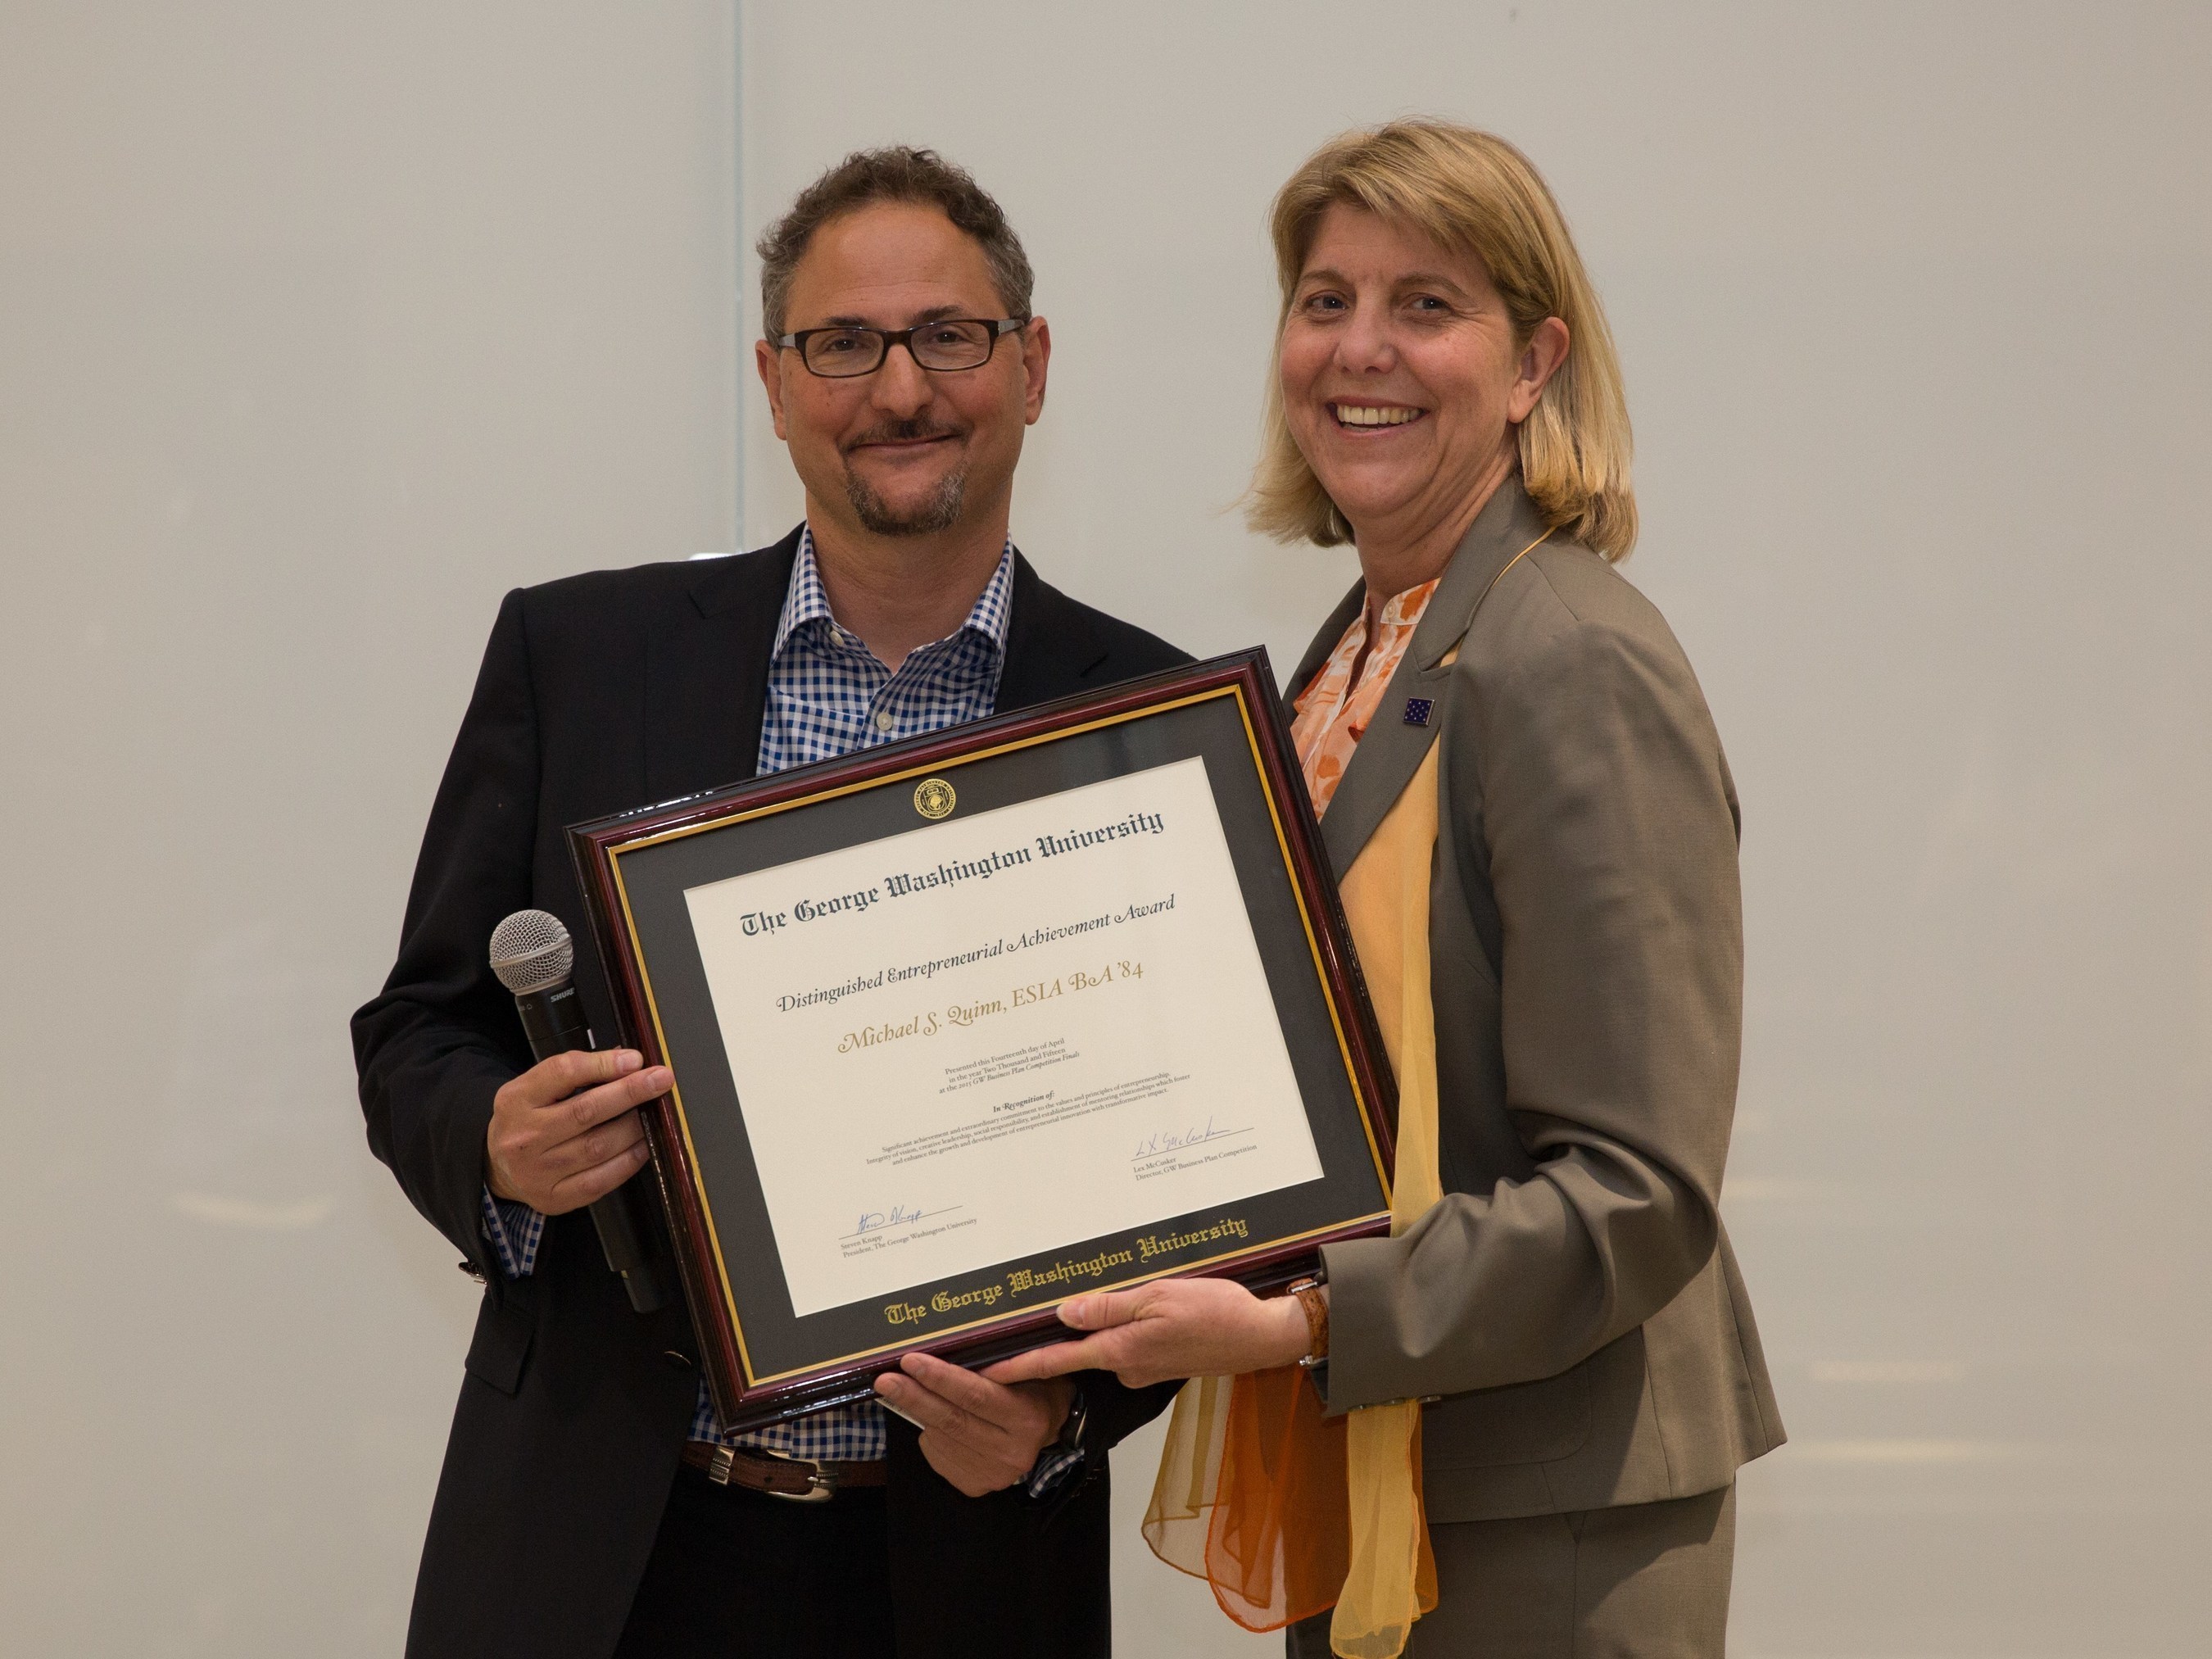 Michael Quinn, Q Advisors Partner, Receives Distinguished Entrepreneurial Achievement Award from Linda Livingstone, Dean of the GW Business School